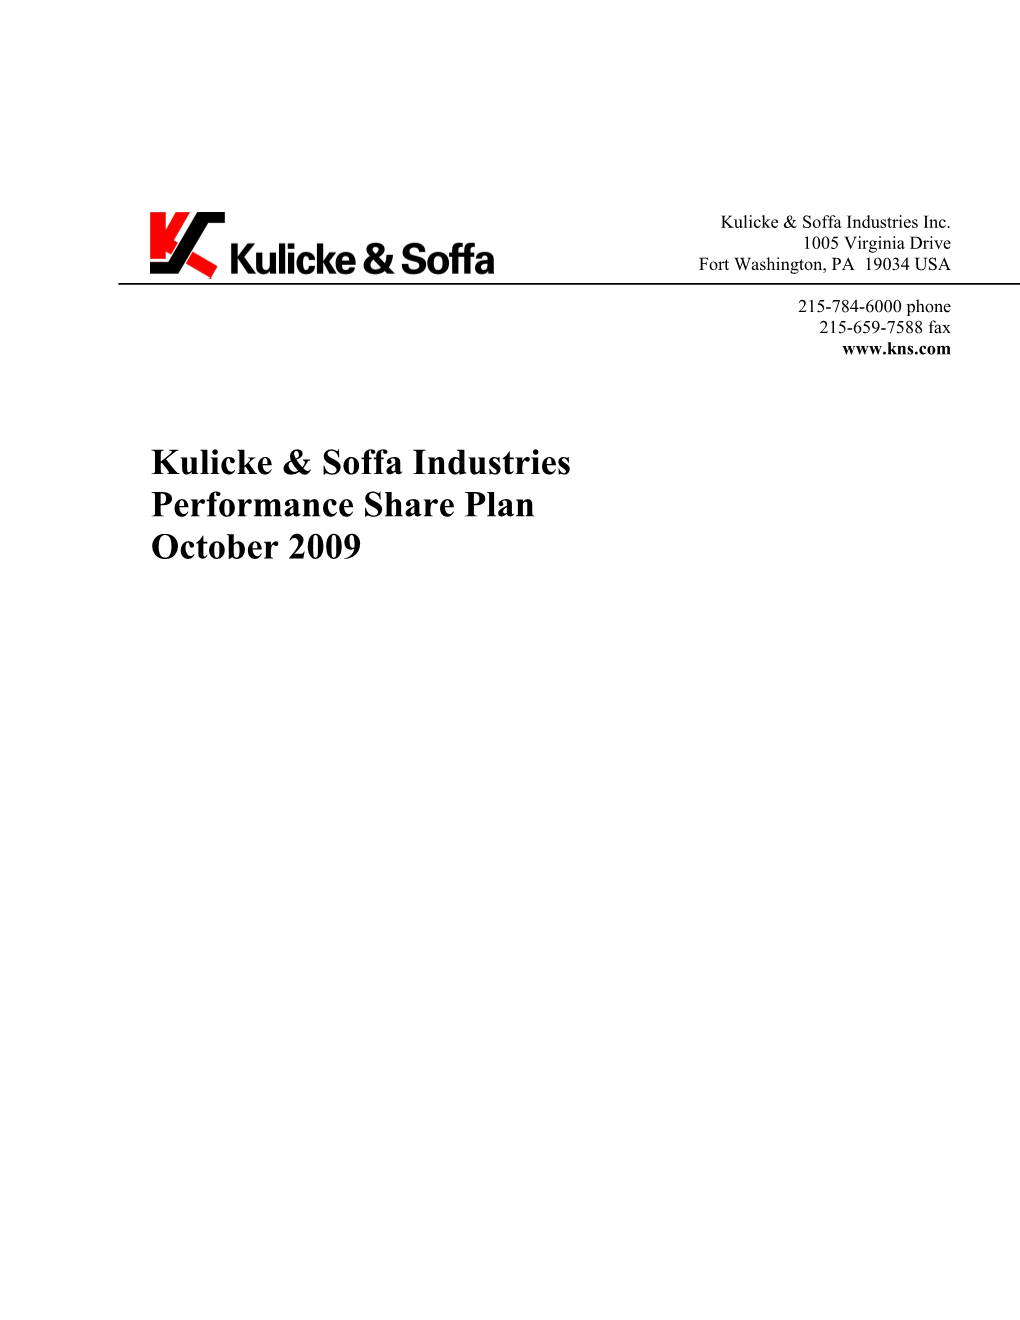 Kulicke and Soffa Industries, Inc